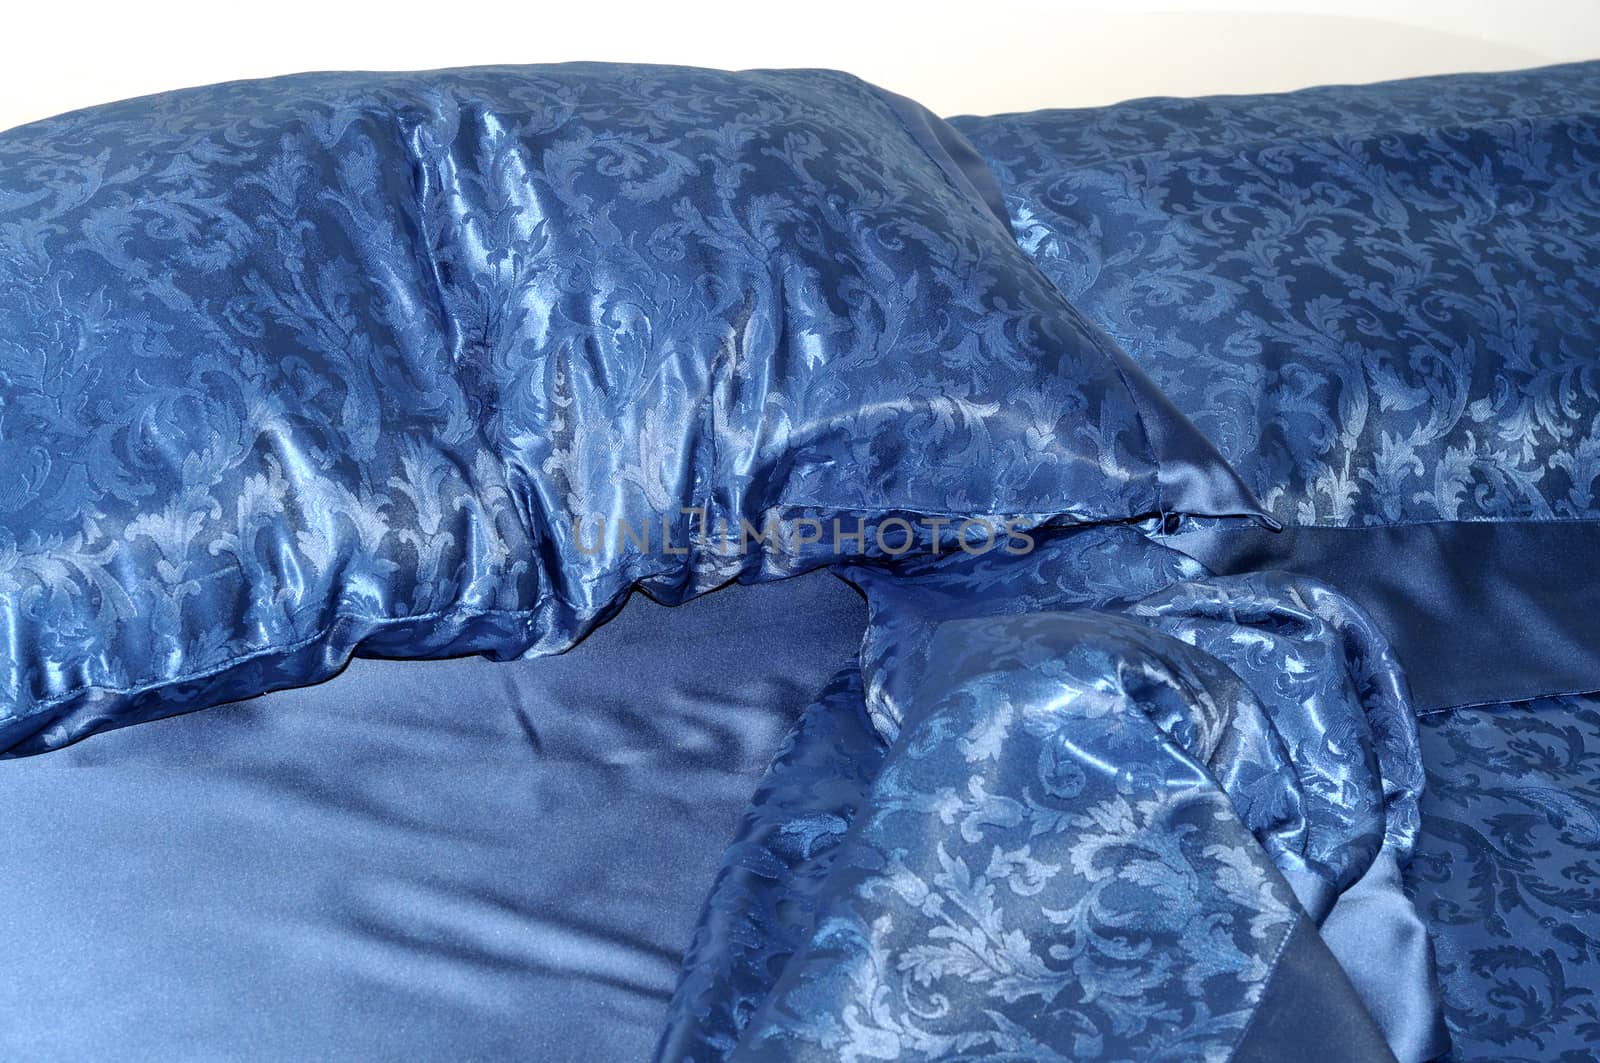 crumpled blue bed, morning sleeper